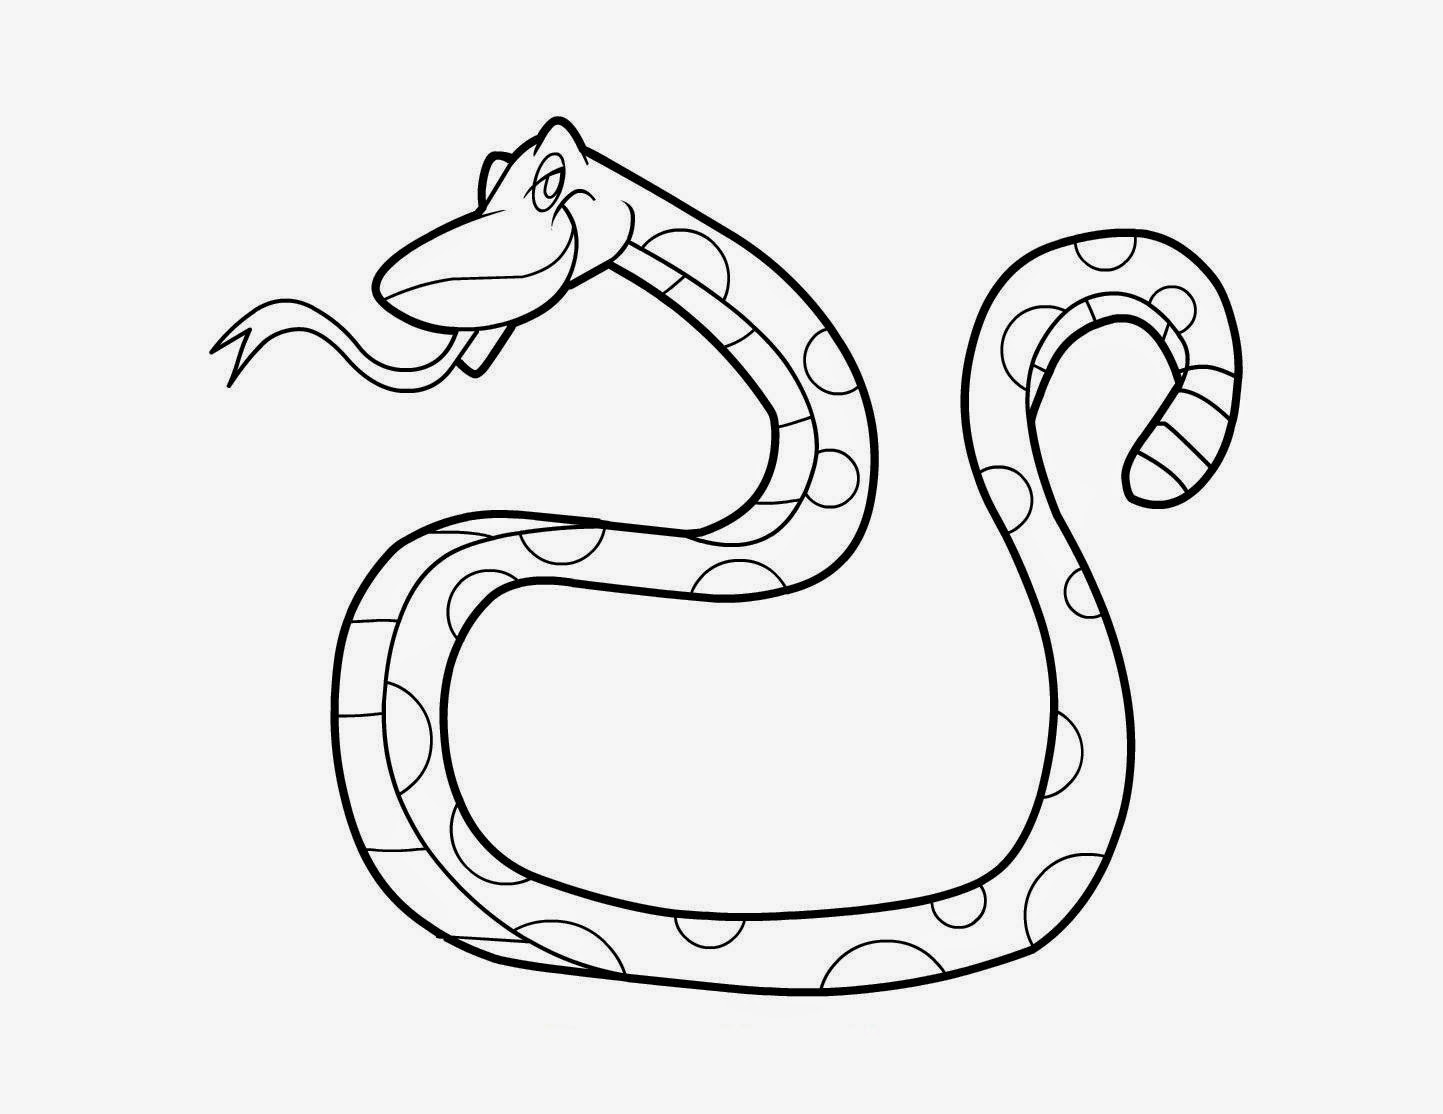 Snake Portrait For Kids Colour Drawing HD Wallpaper